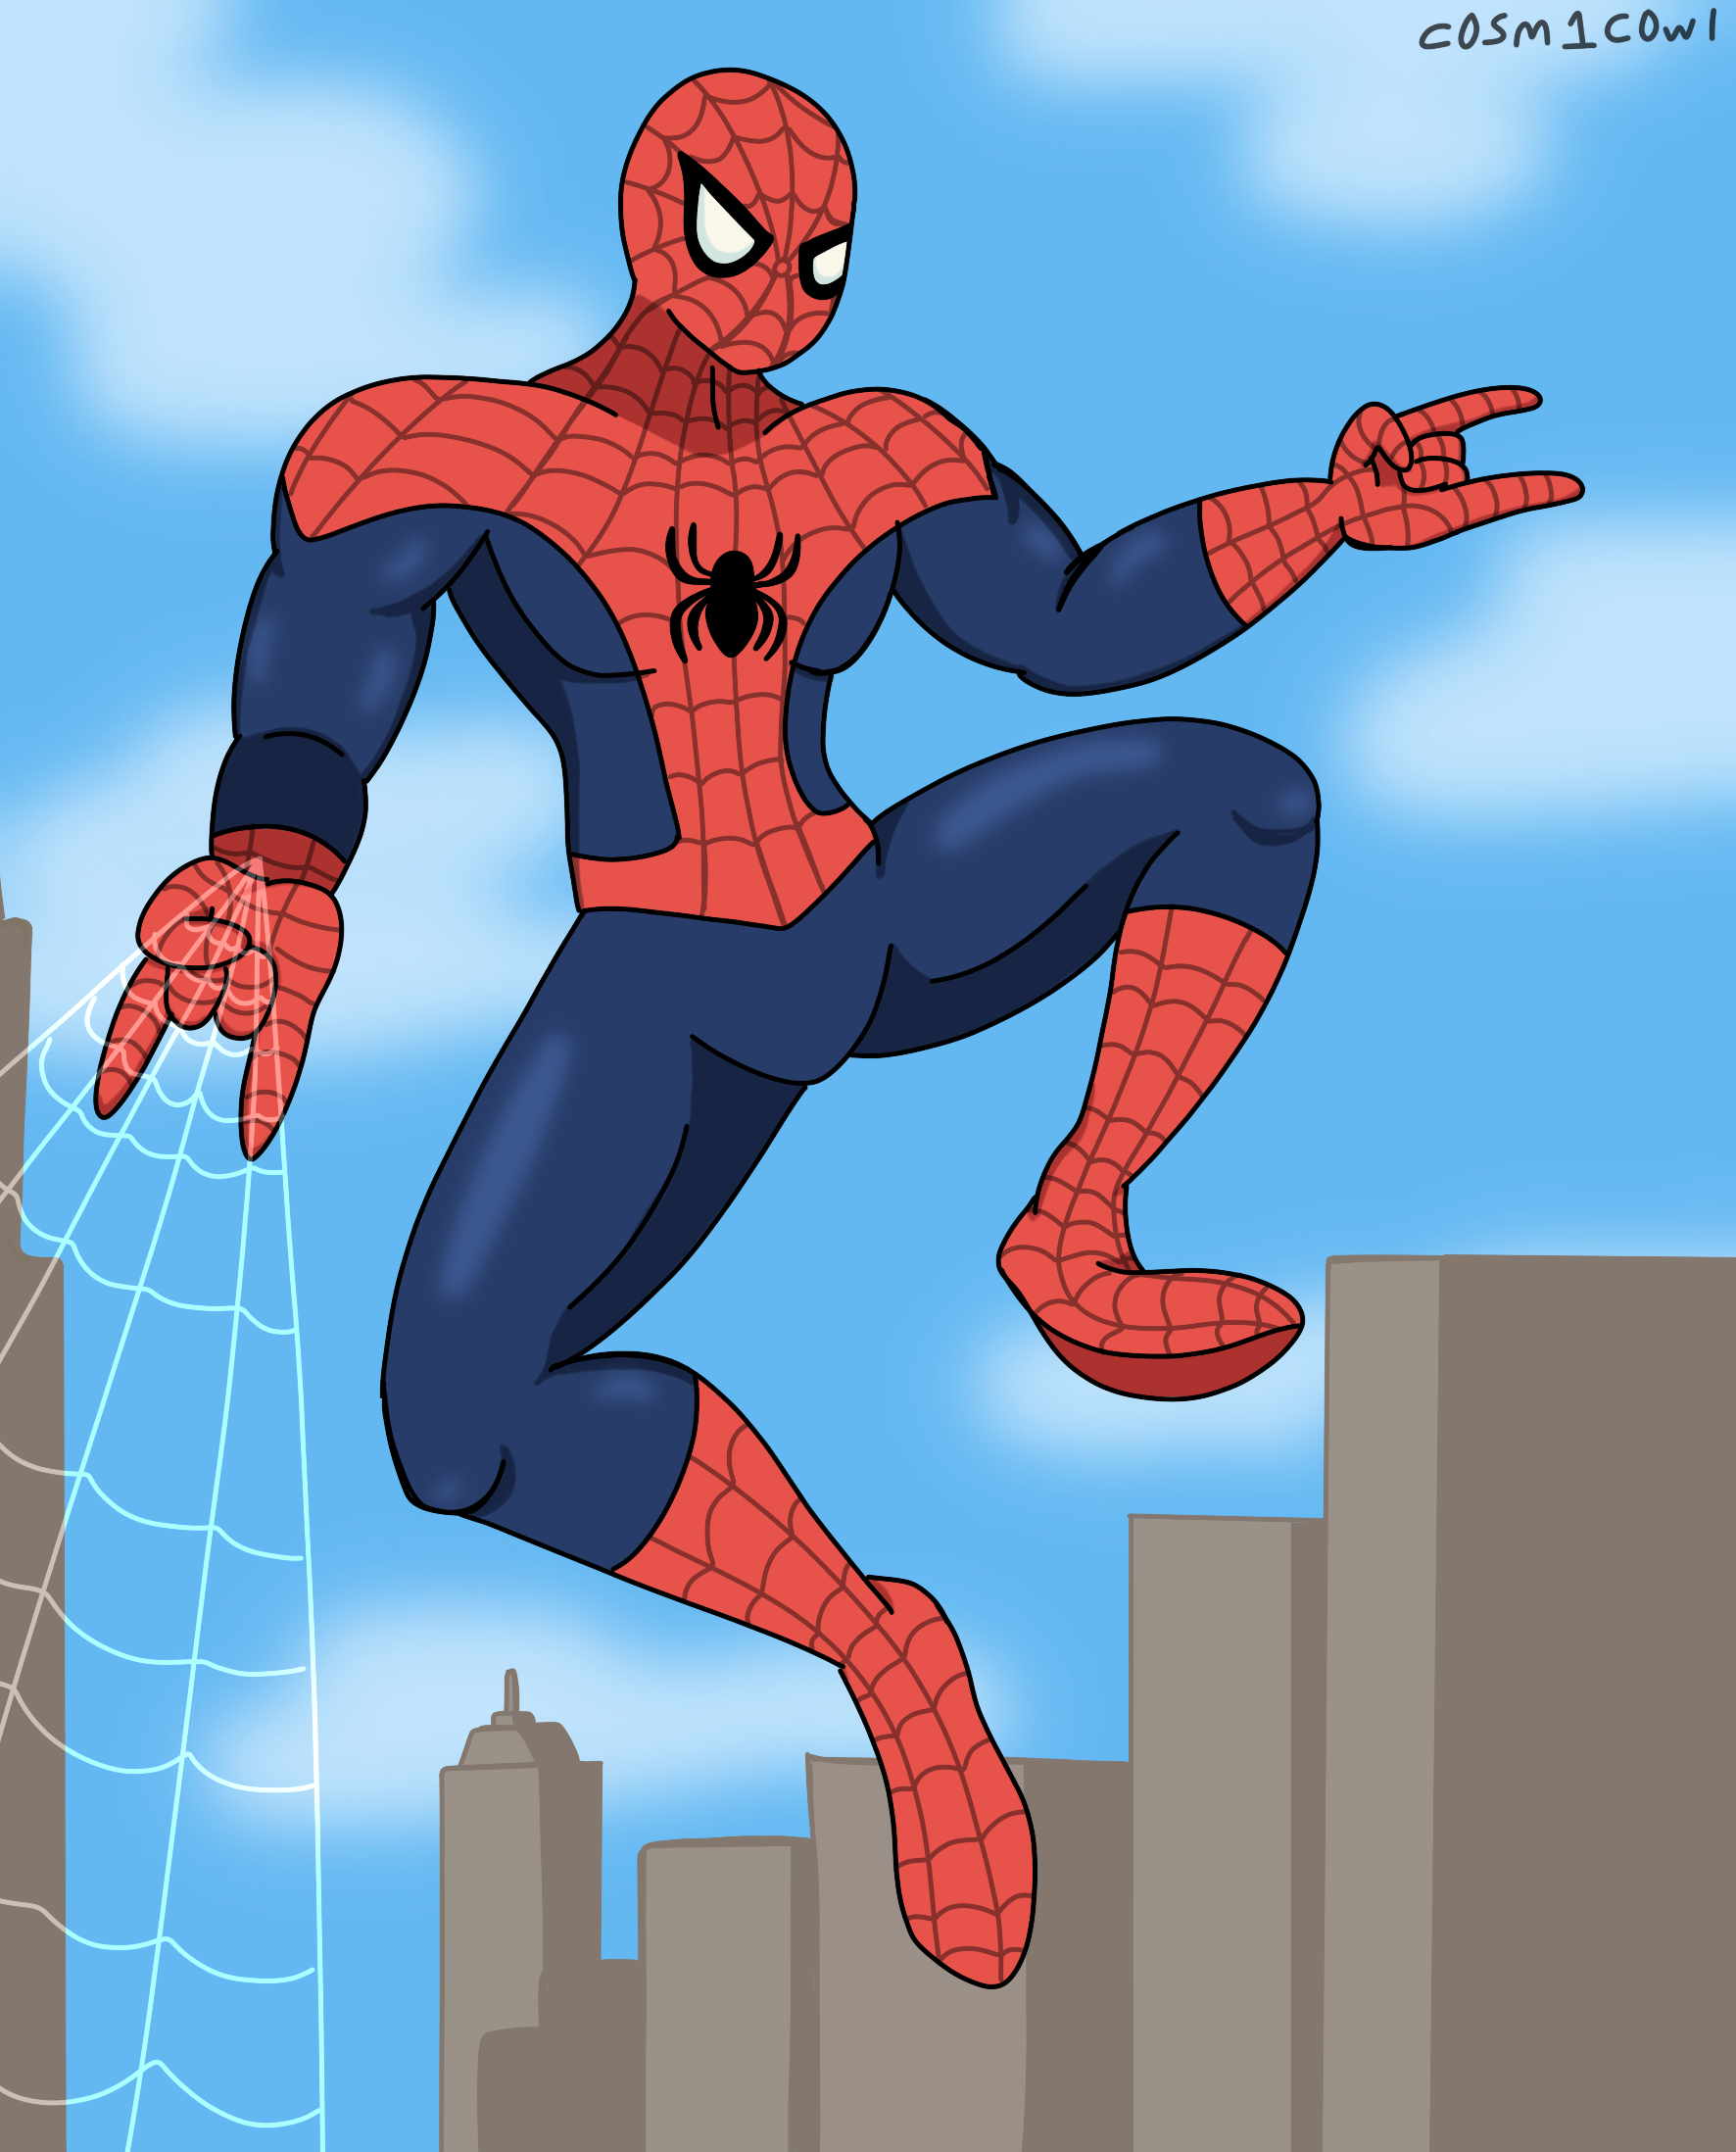 Your friendly neighborhood Spider-Man by c0sm1c0wl on DeviantArt